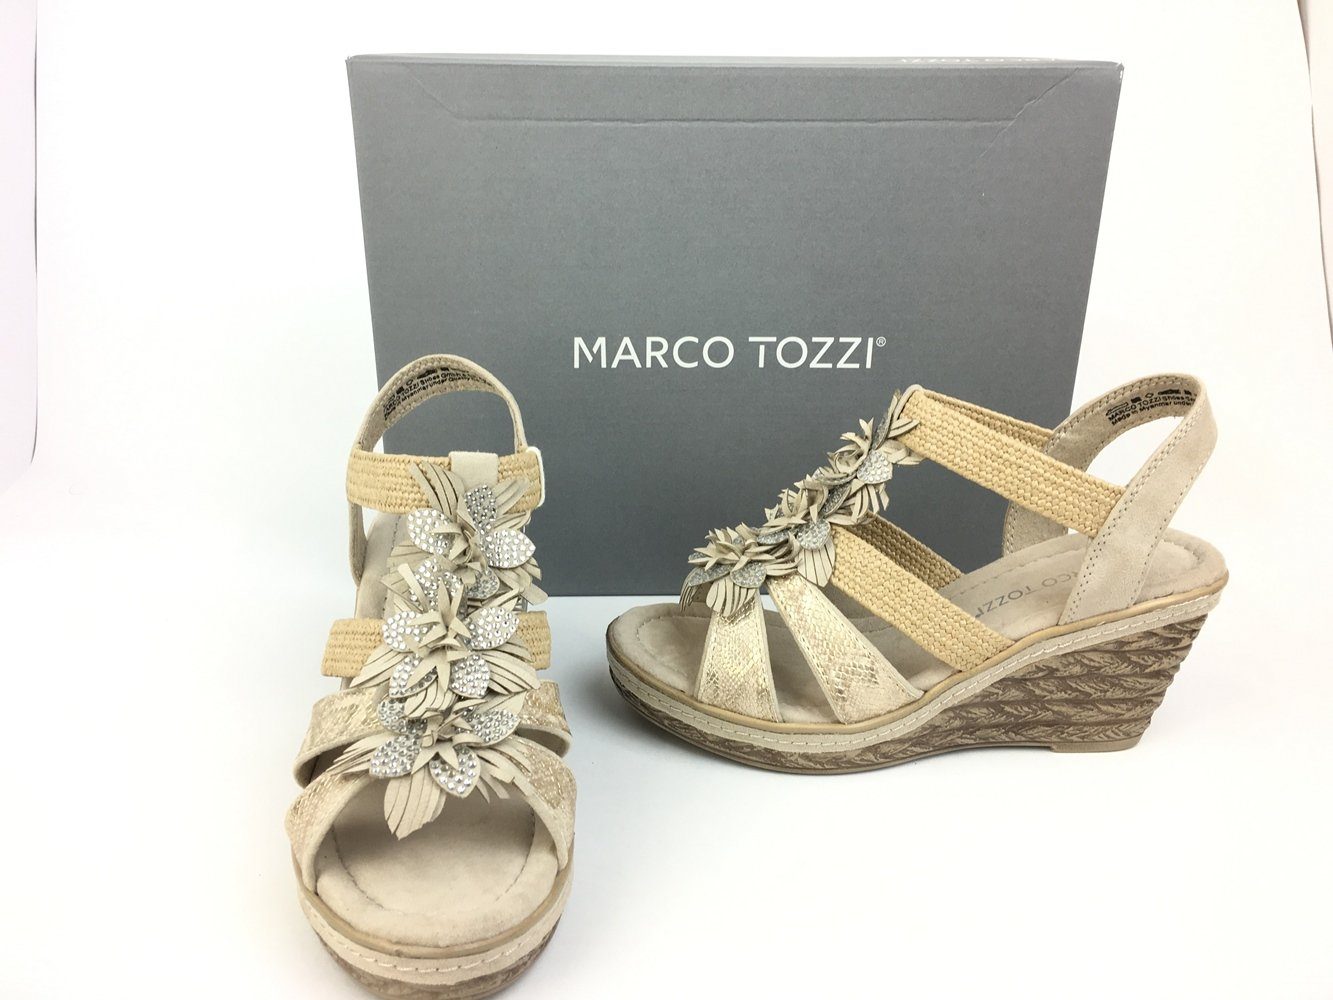 MARCO TOZZI Marco Tozzi Damen Keil-Sandale mit beige Steg Keilsandalette am Glitzerblümchen